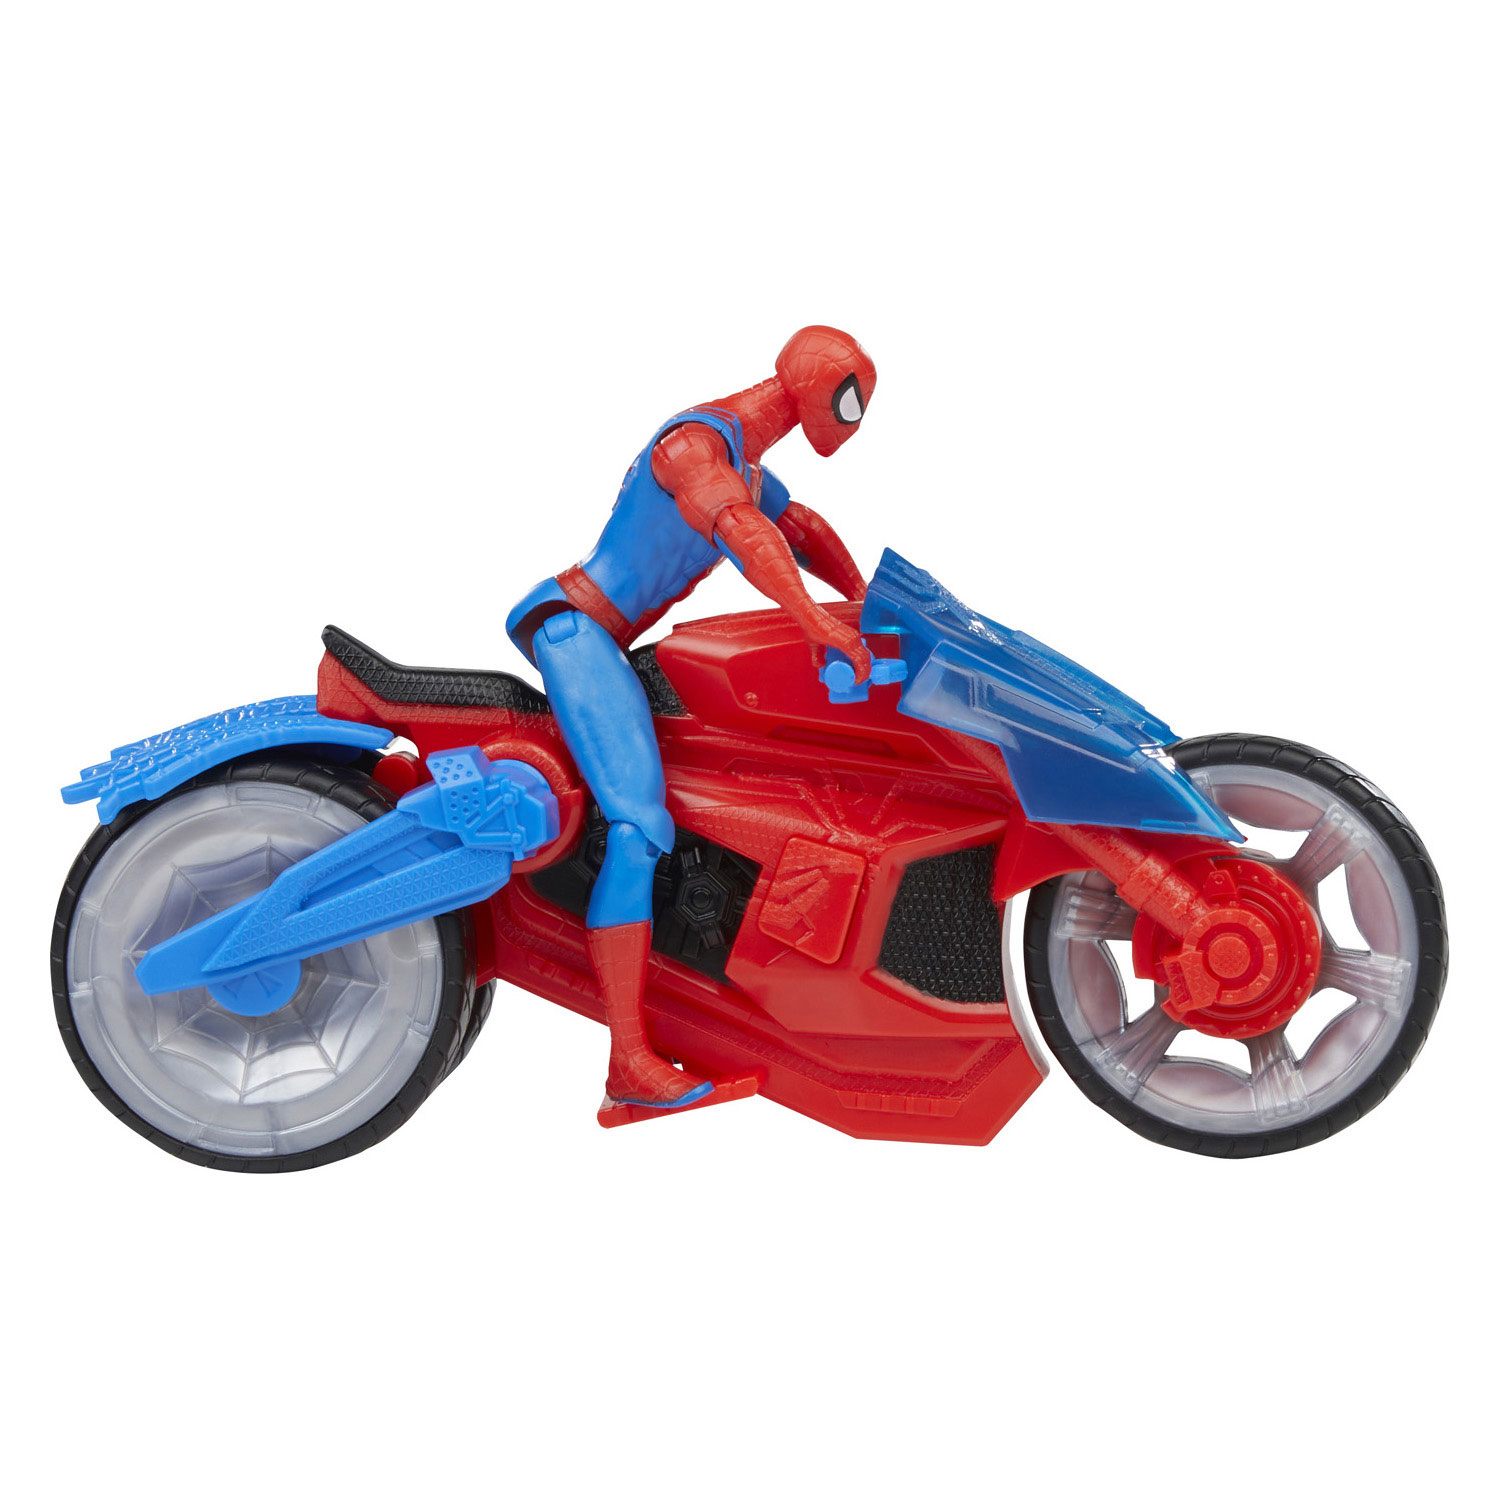 Marvel Spider-Man Web Blast Cycle Actiefiguur